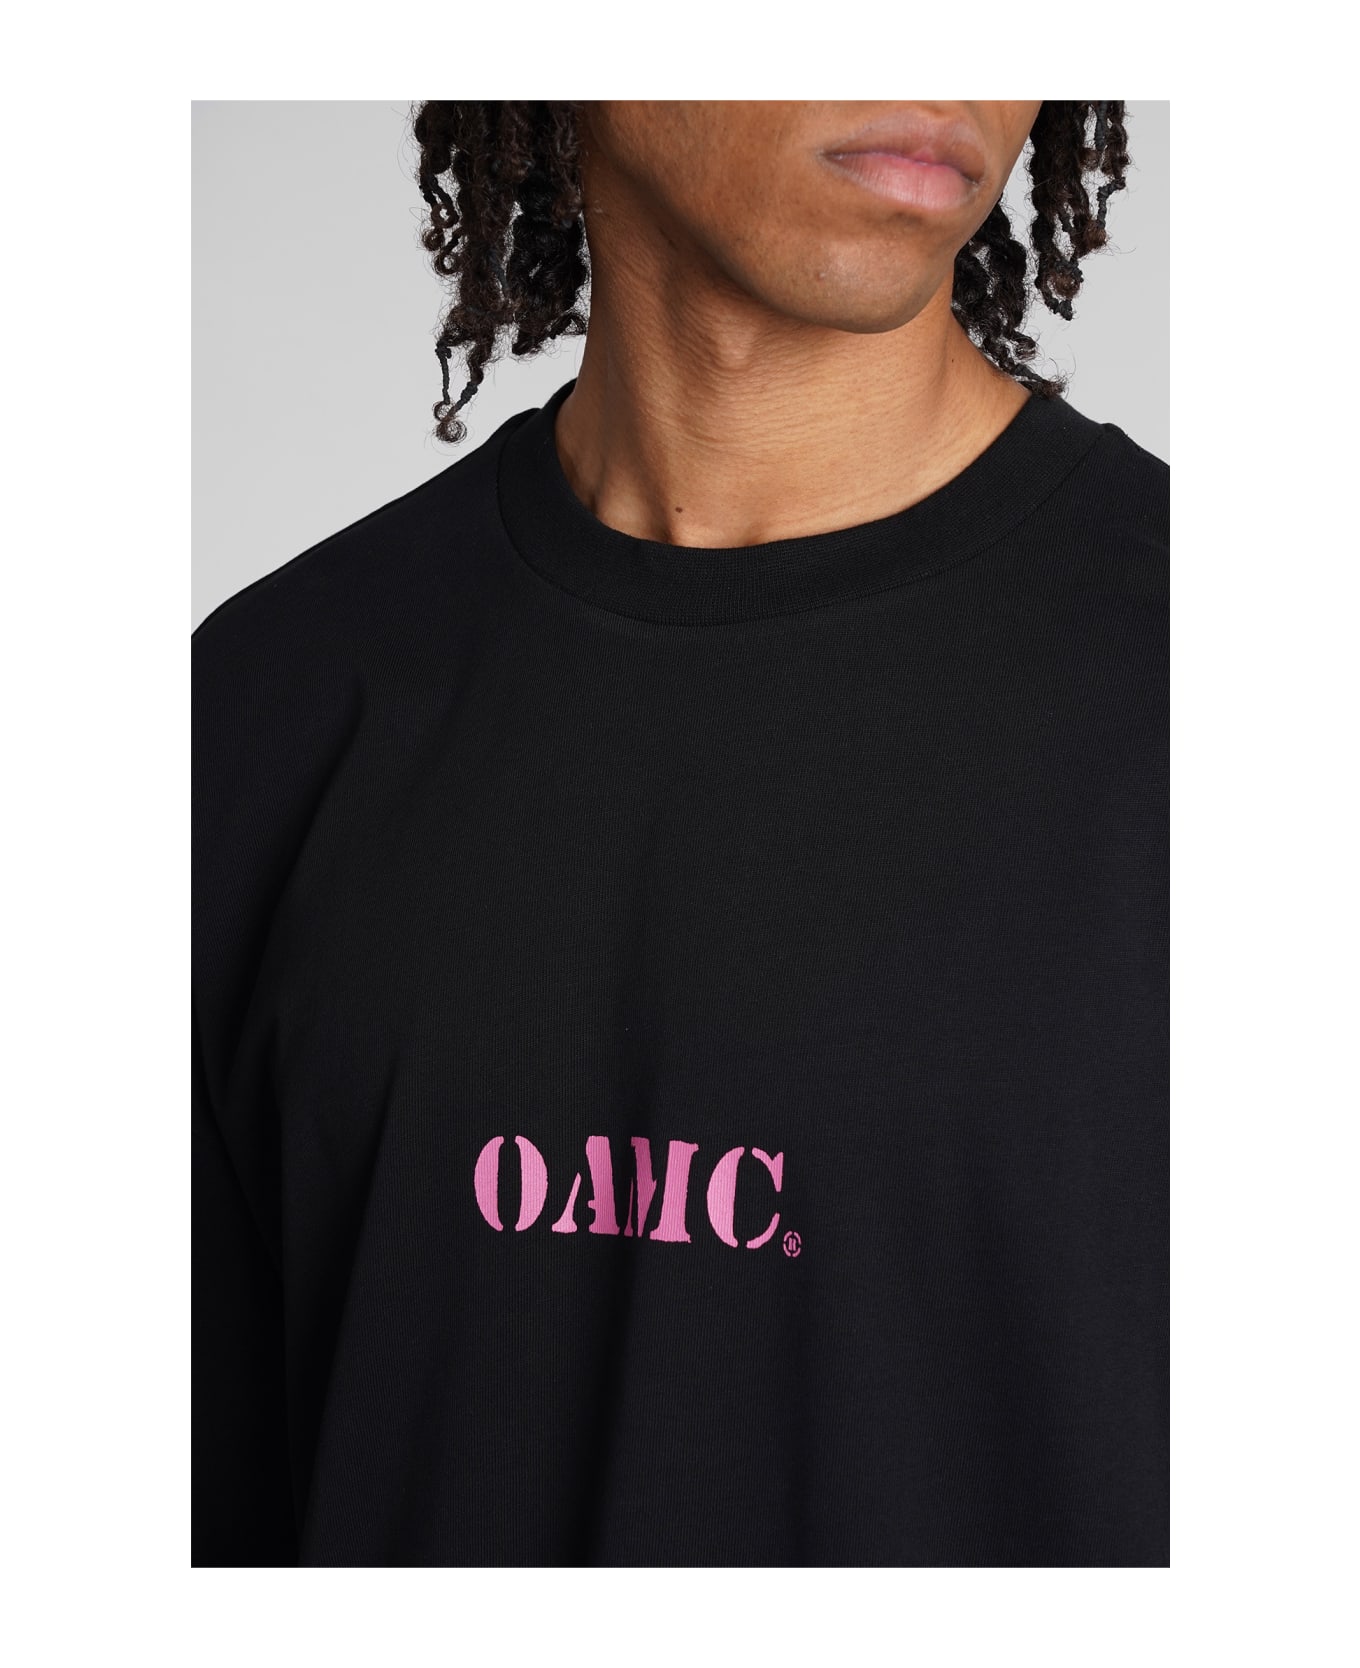 OAMC T-shirt In Black Cotton - black